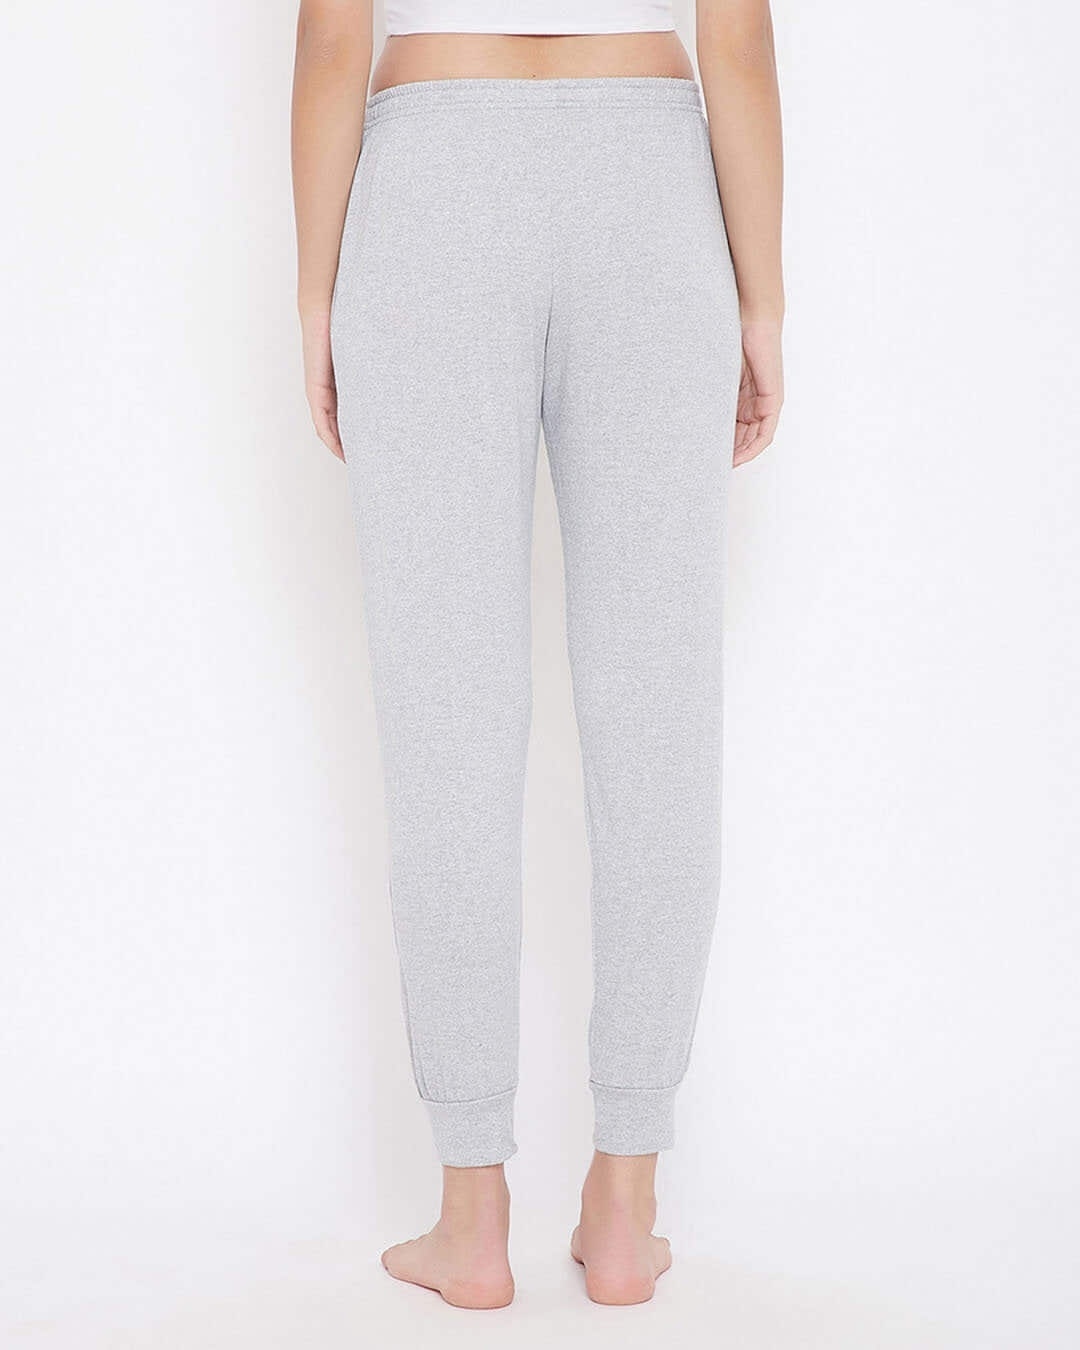 Shop Chic Basic Cuffed Pyjama In Grey   Cotton Rich-Back